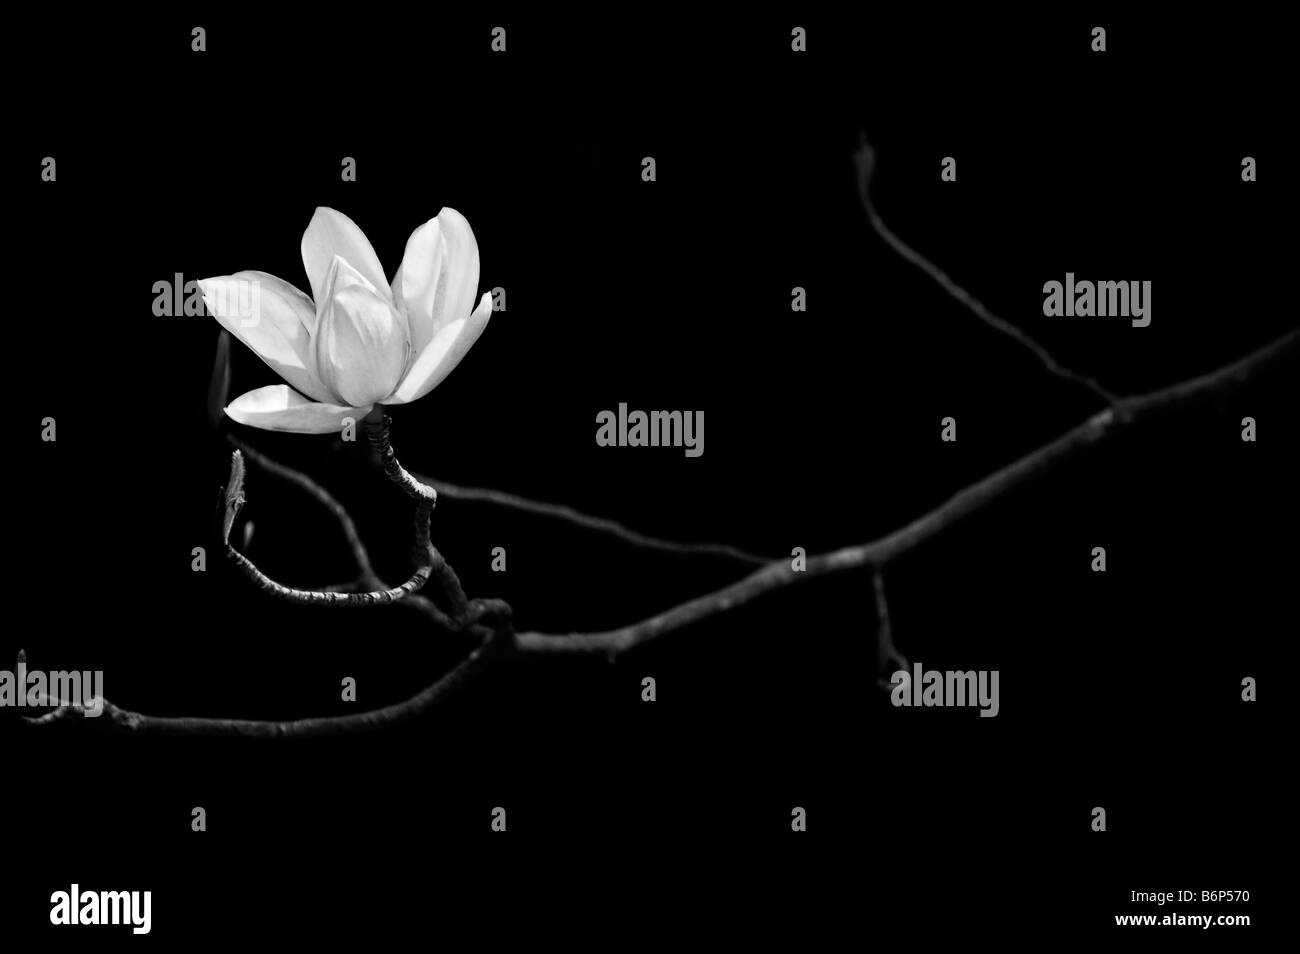 Magnolia campbellii darjeeling flower. Black and white Stock Photo